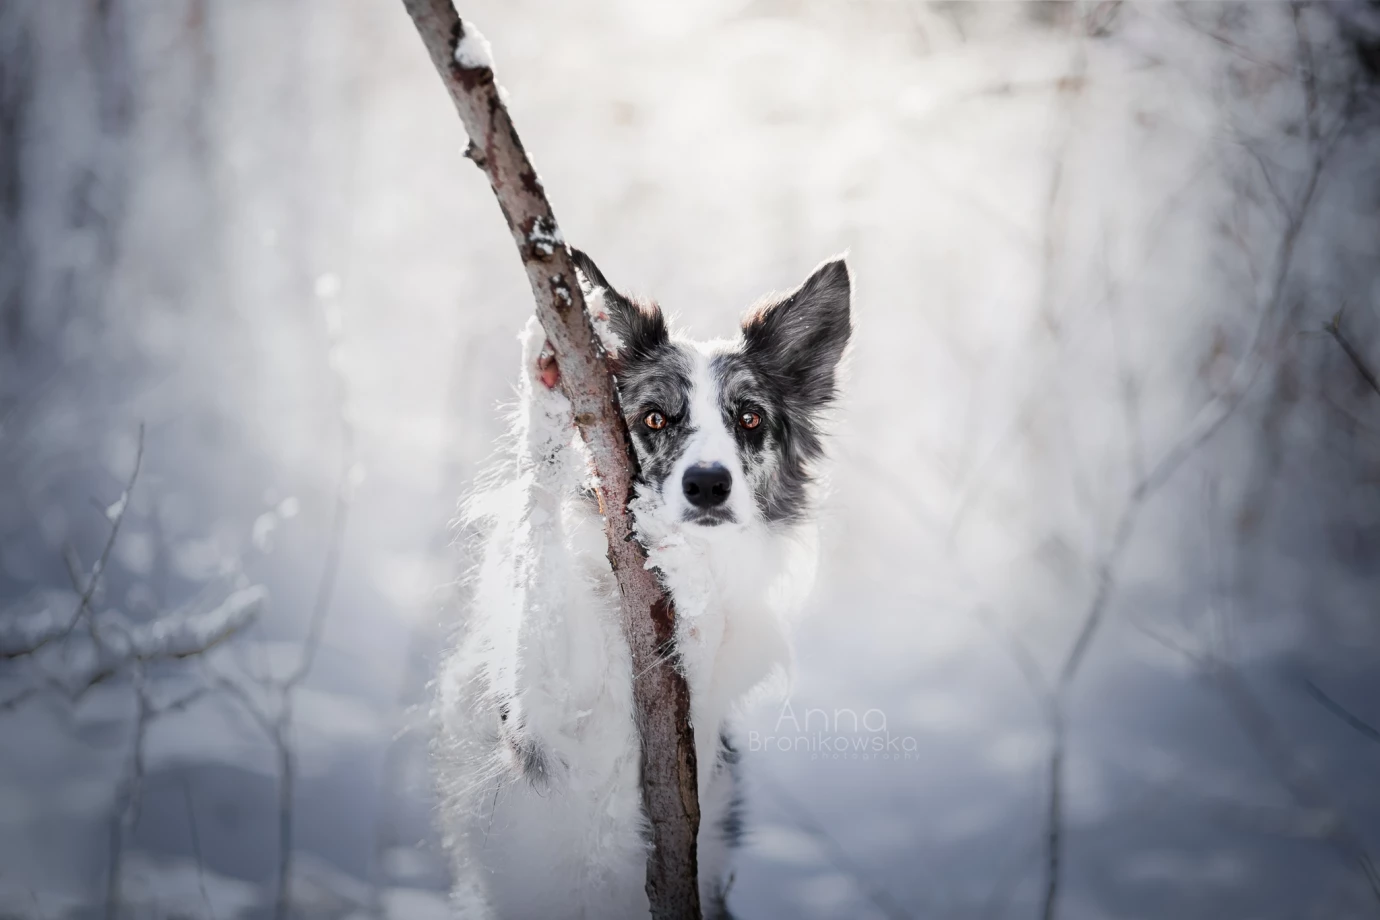 fotograf tarnowskie-gory huskana-fotografia portfolio zimowe sesje zdjeciowe zima snieg